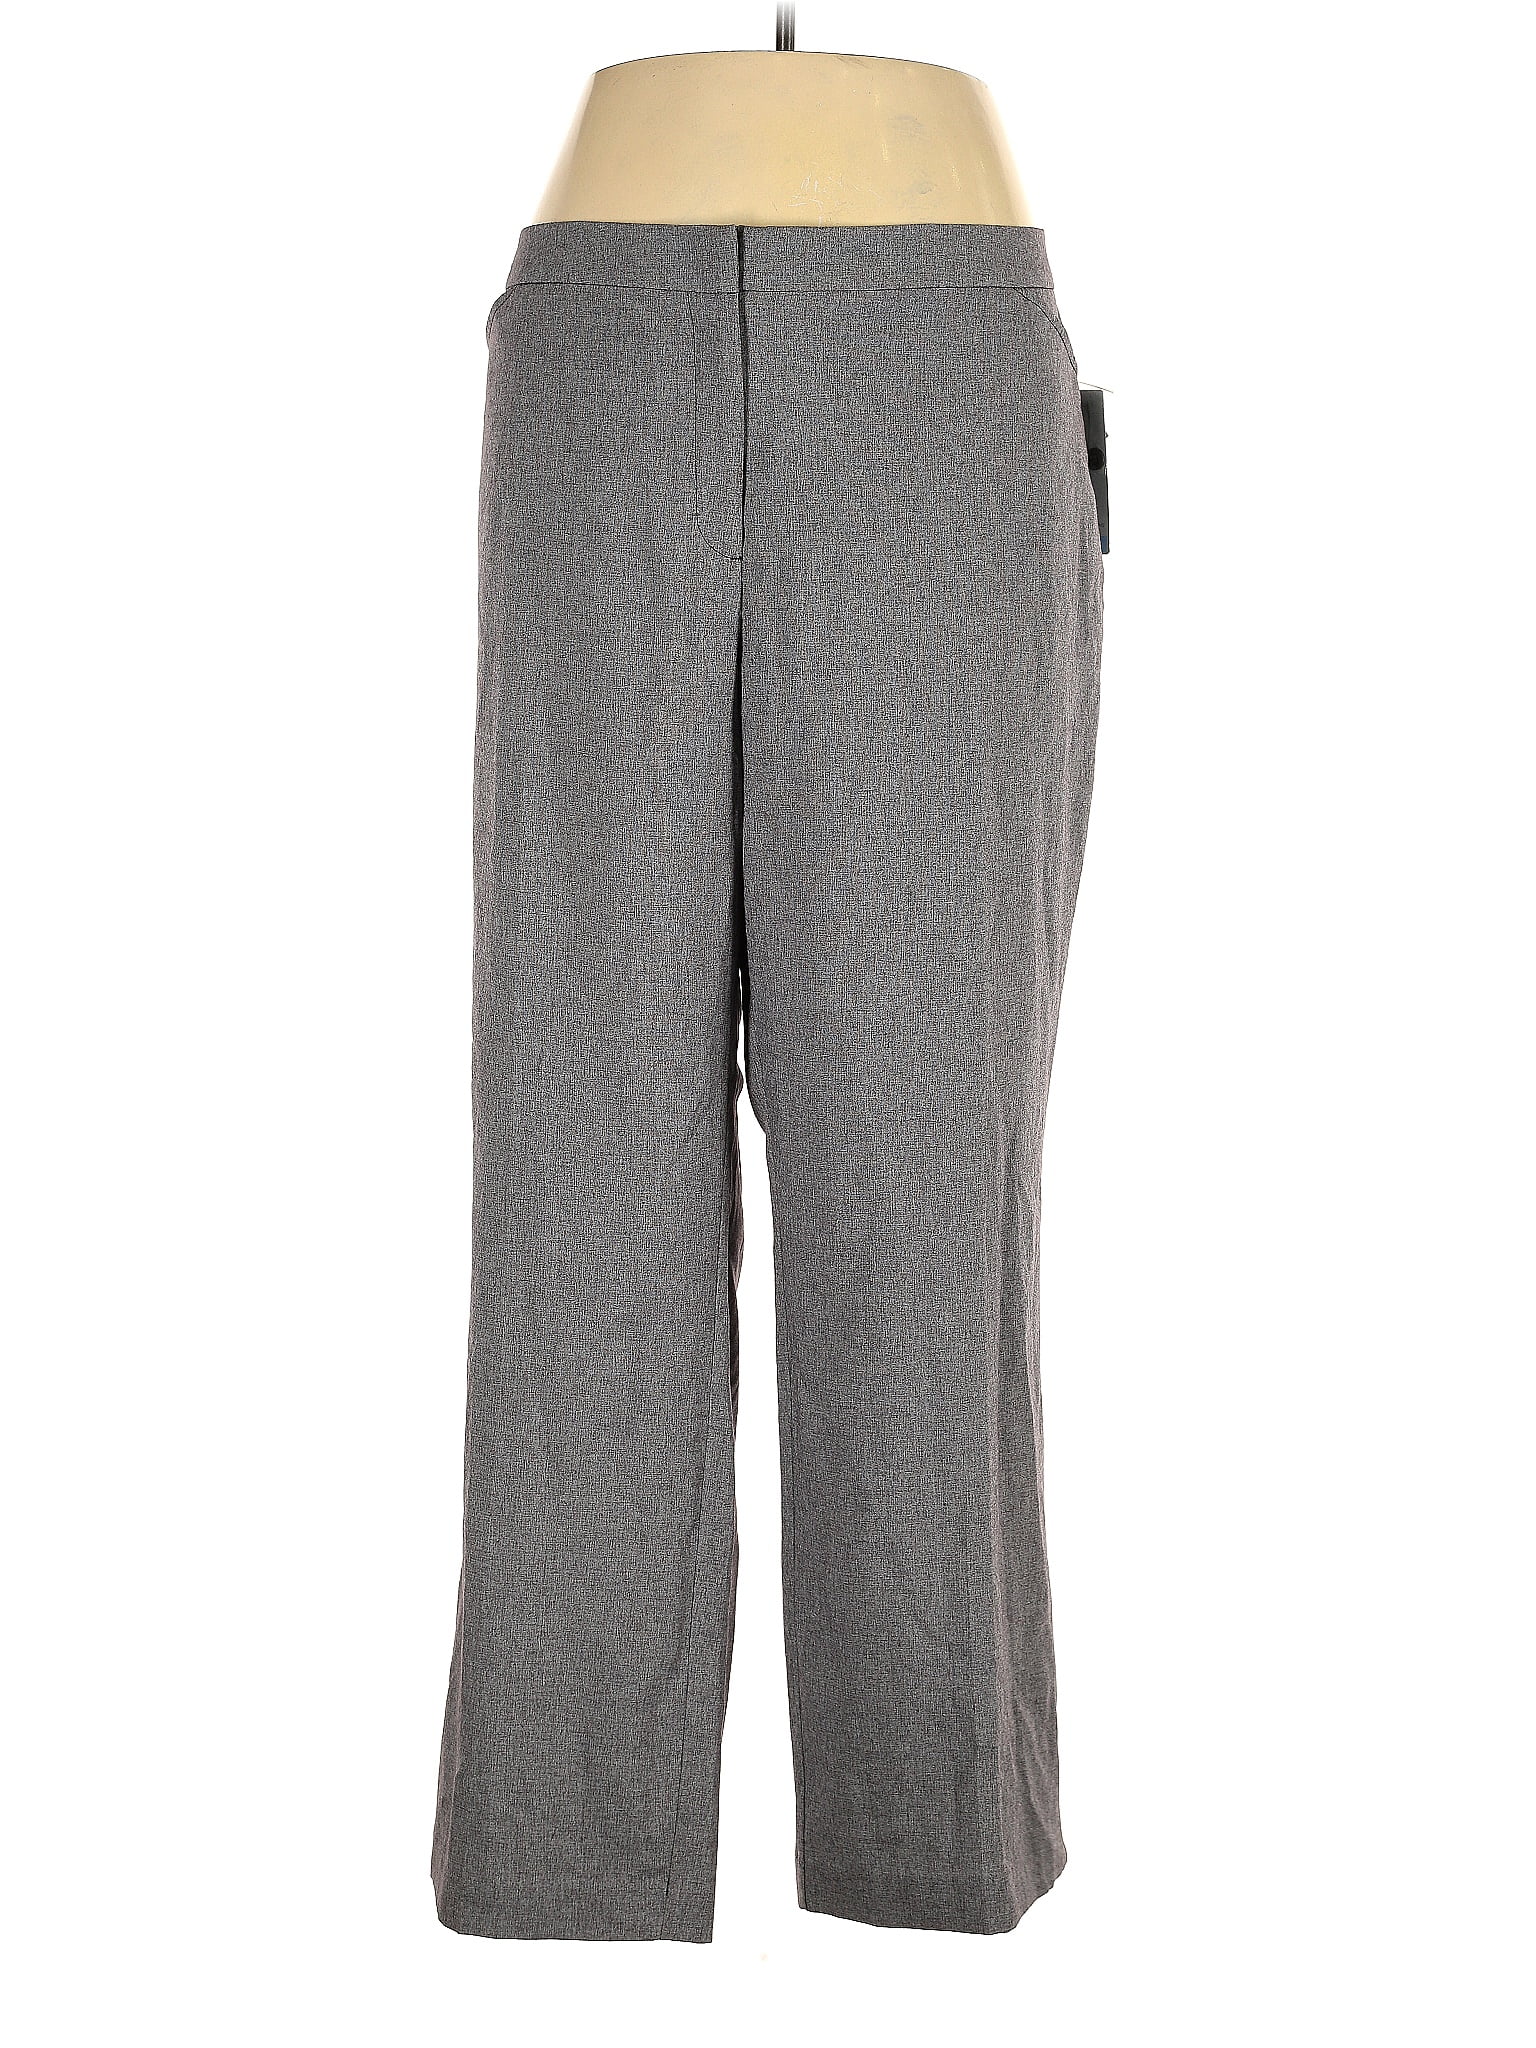 Apt. 9 Gray Dress Pants Size 24 (Plus) - 54% off